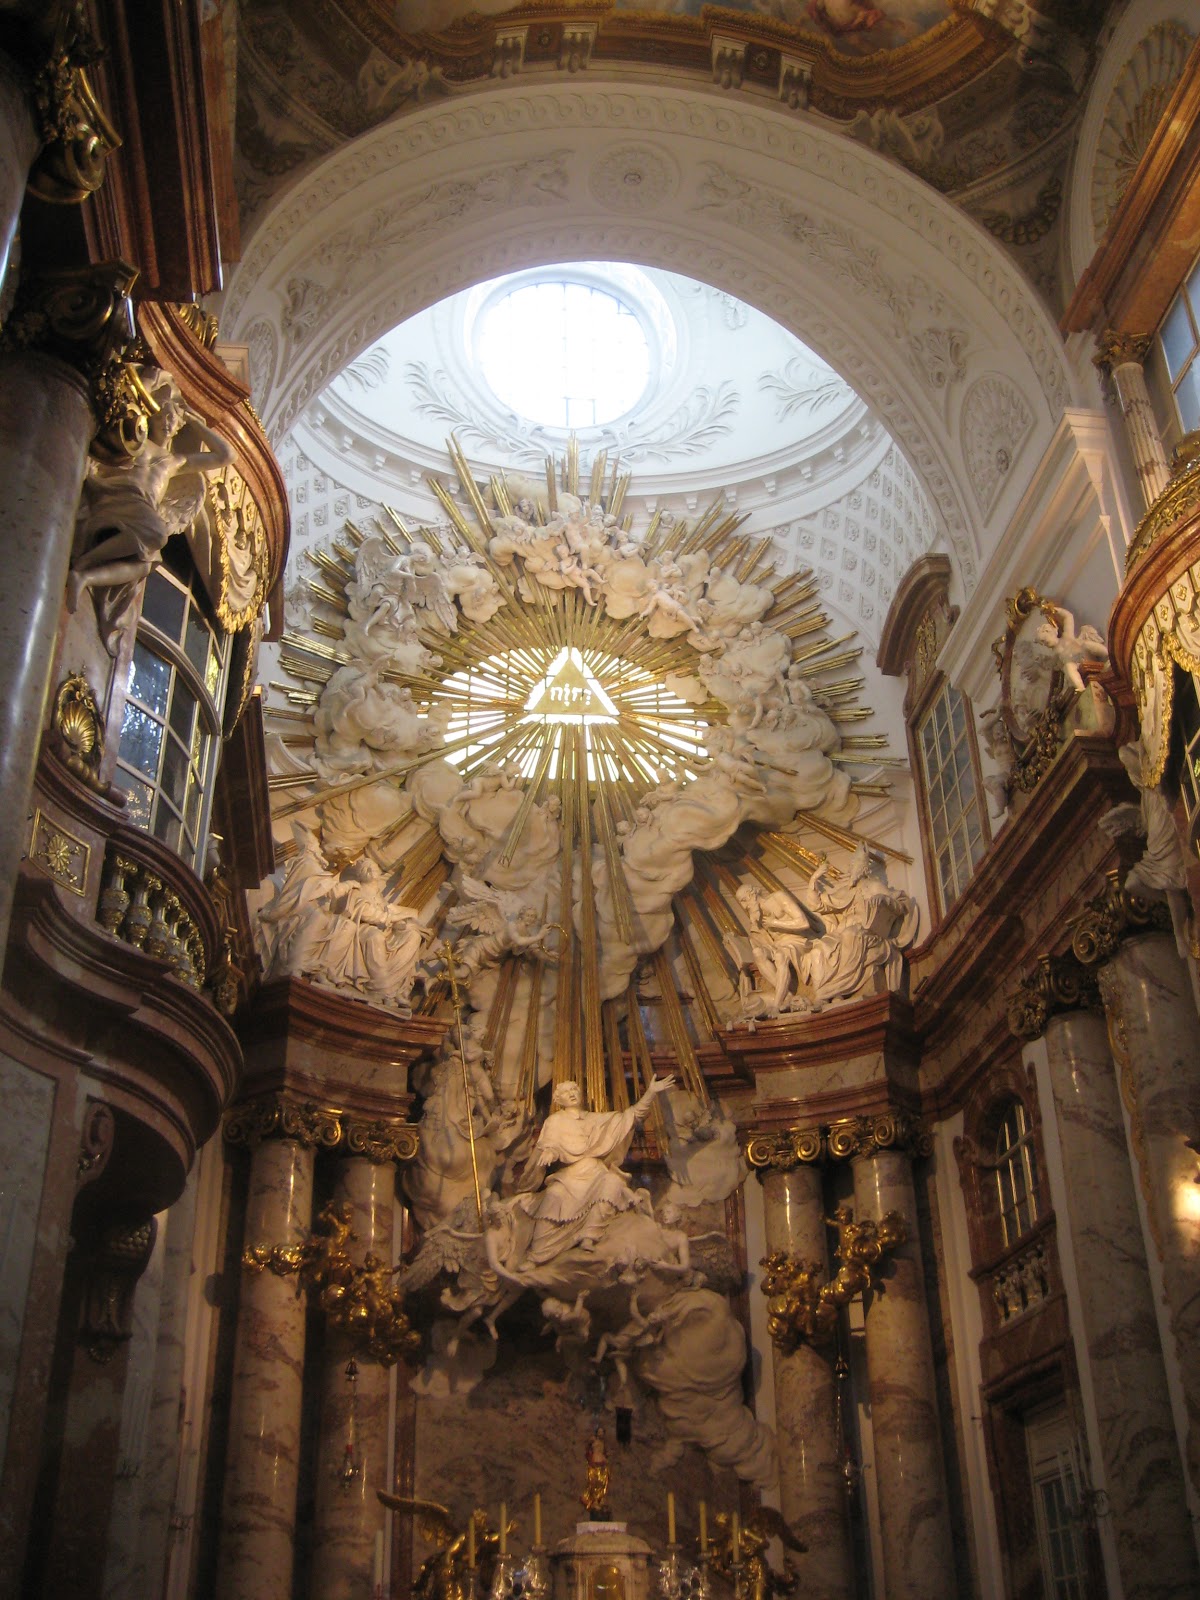 sybaritic: Saint Charles Church, Vienna